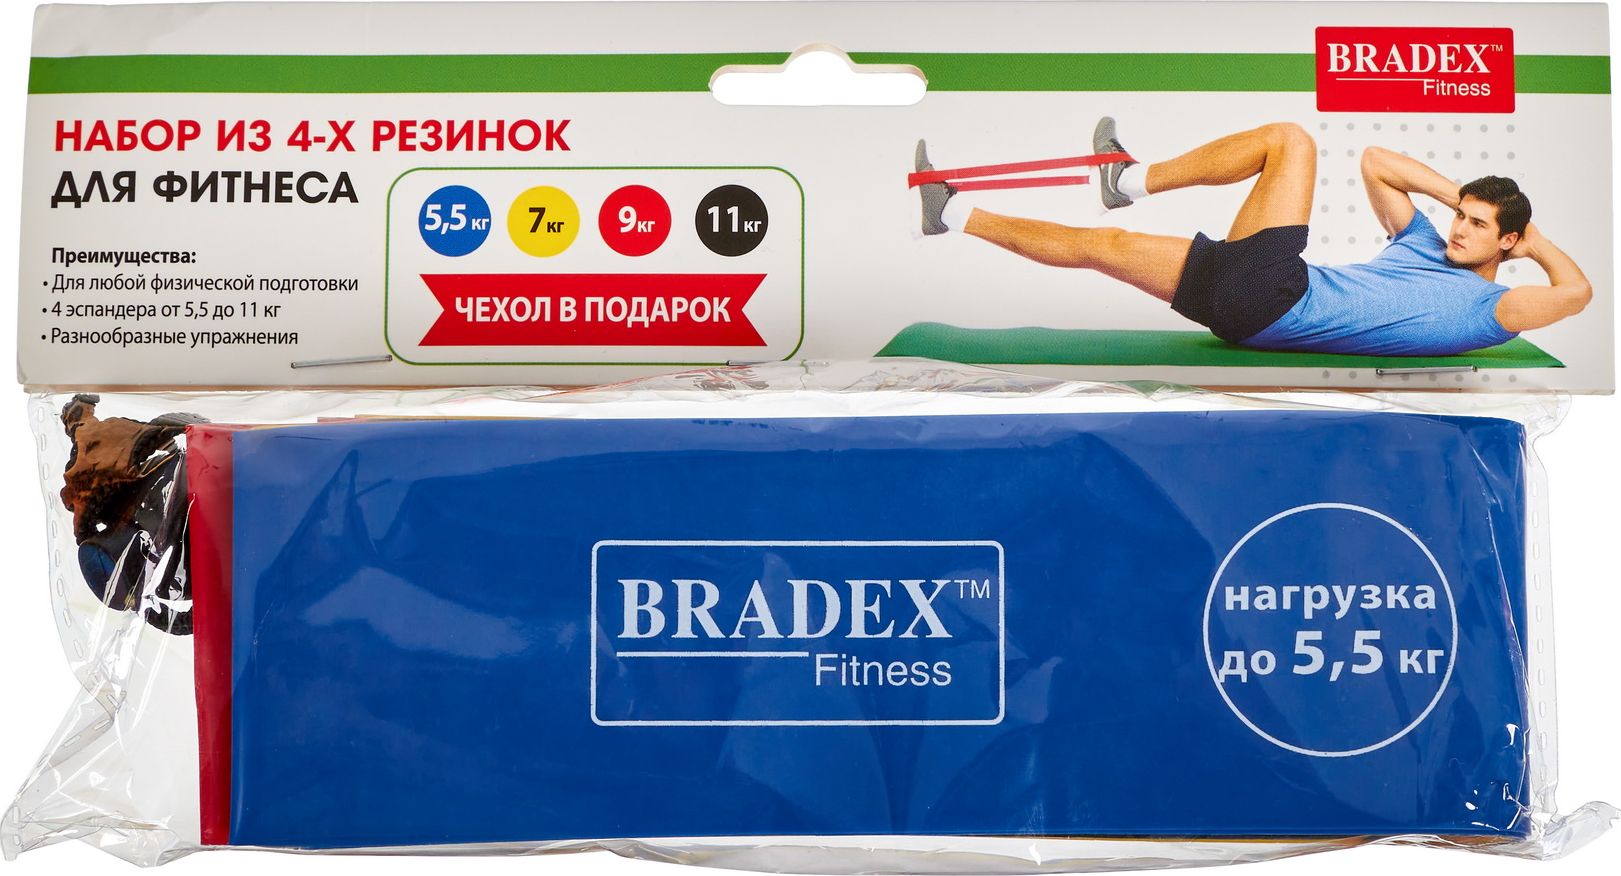 Набор из 4-х резинок для фитнеса Bradex, нагрузка до 5,5/7/9/11 кг